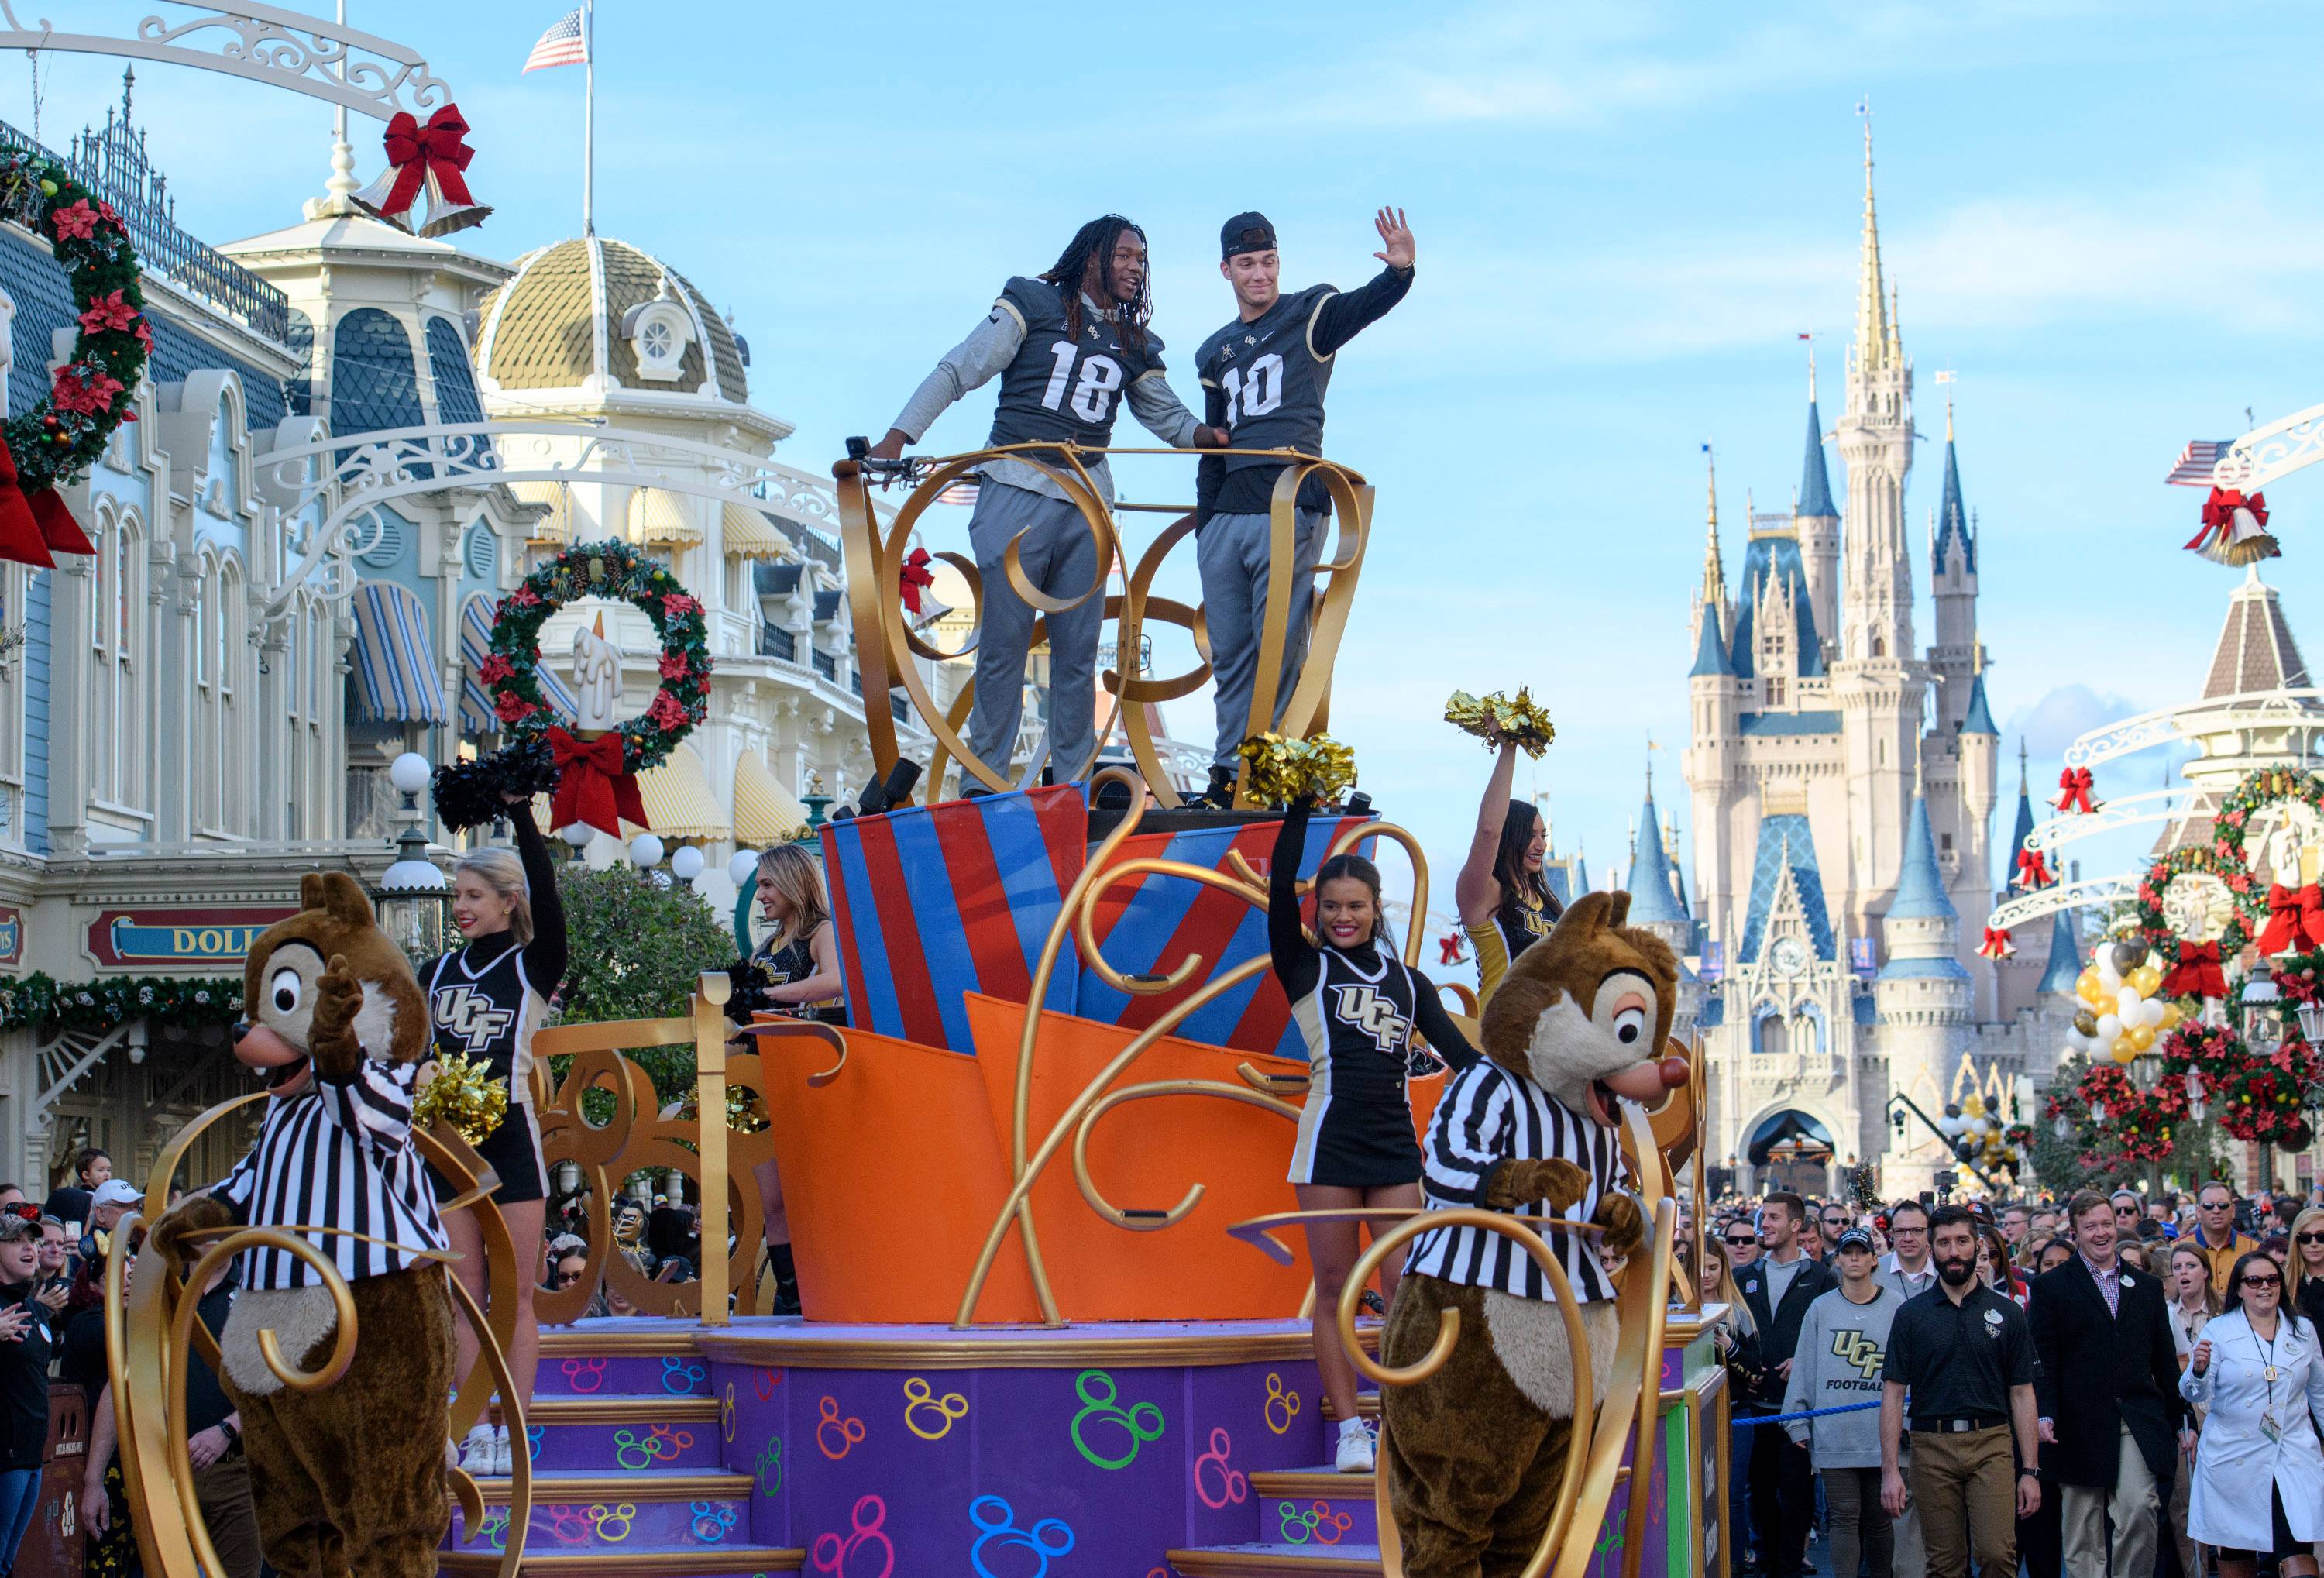 UCF Knights Football Team Celebrated in Parade at Walt Disney World Resort